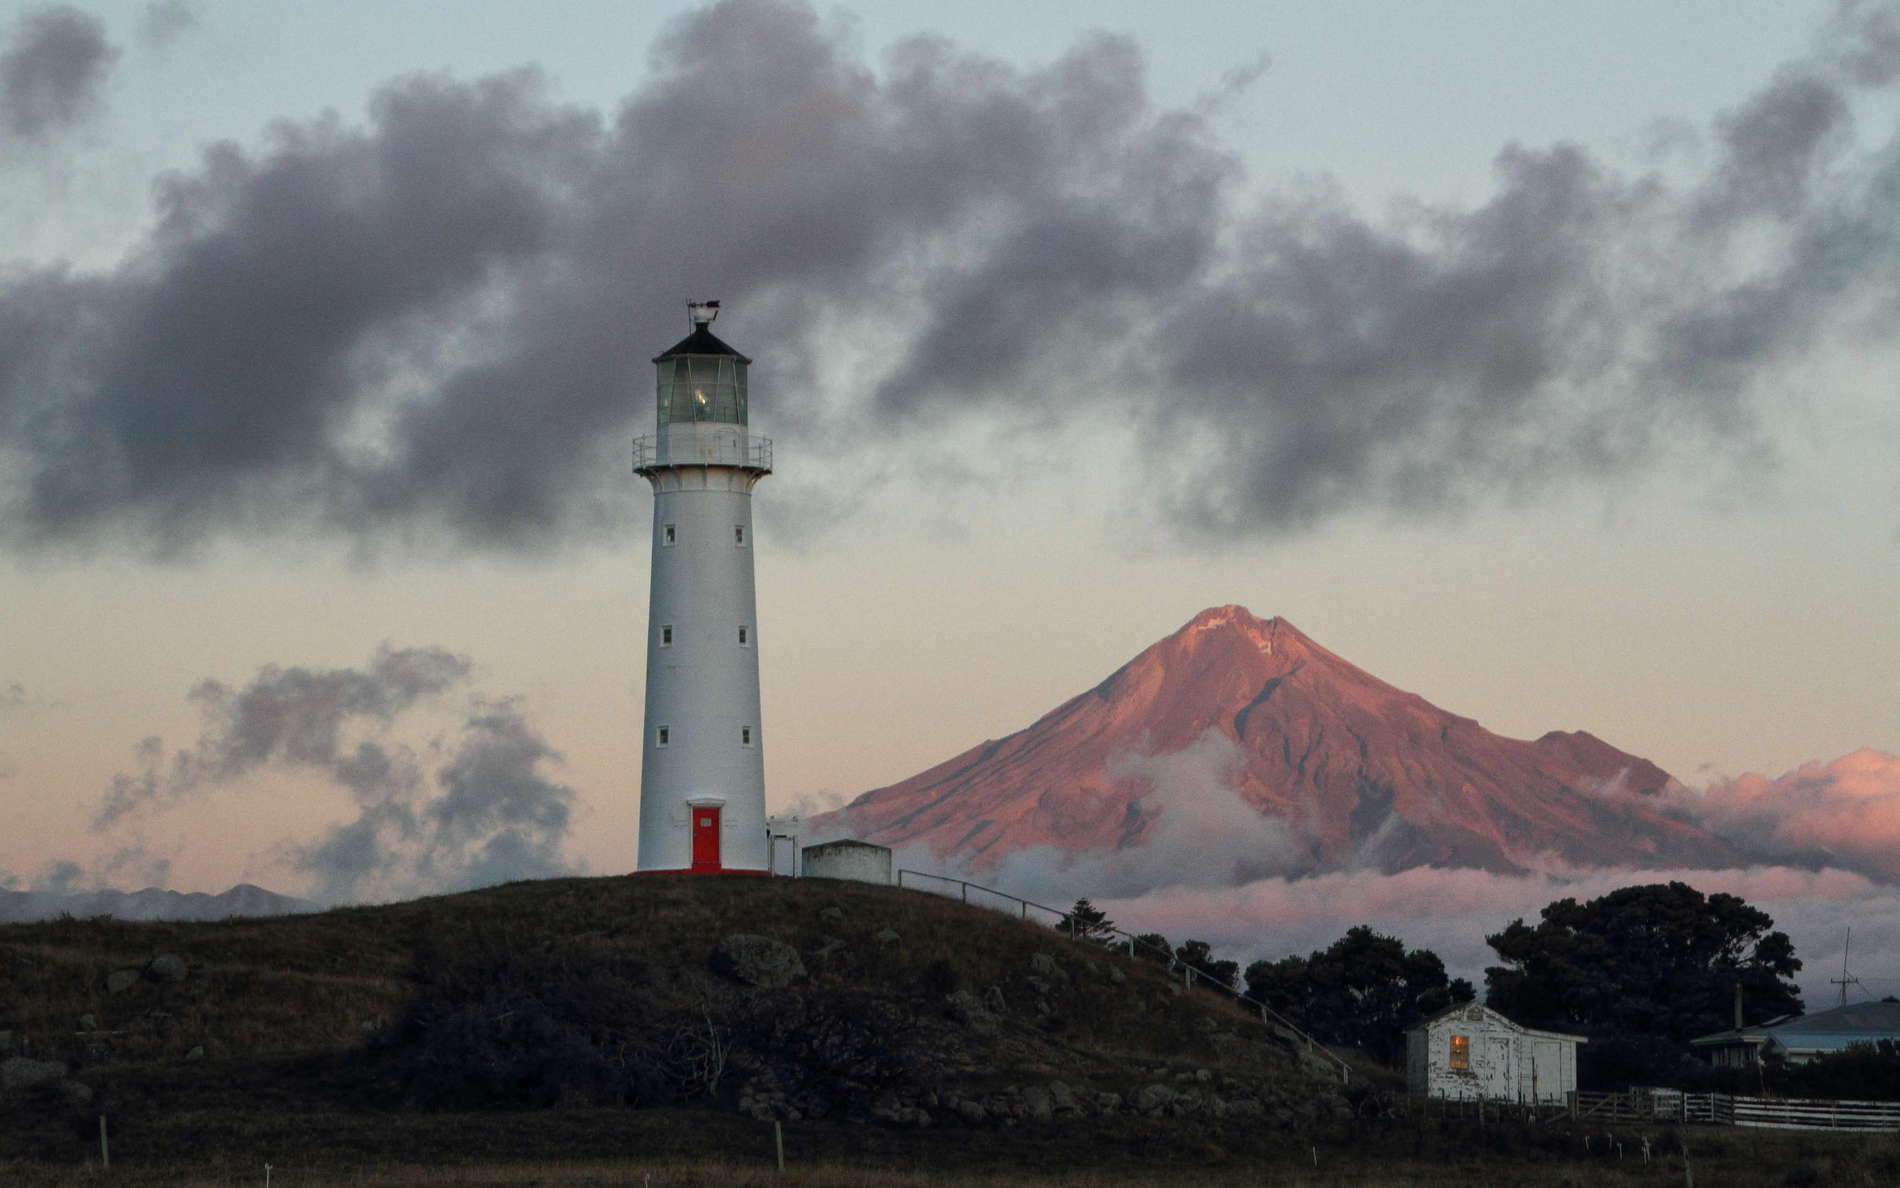 Cape Egmont Lighthouse and Mt. Taranaki